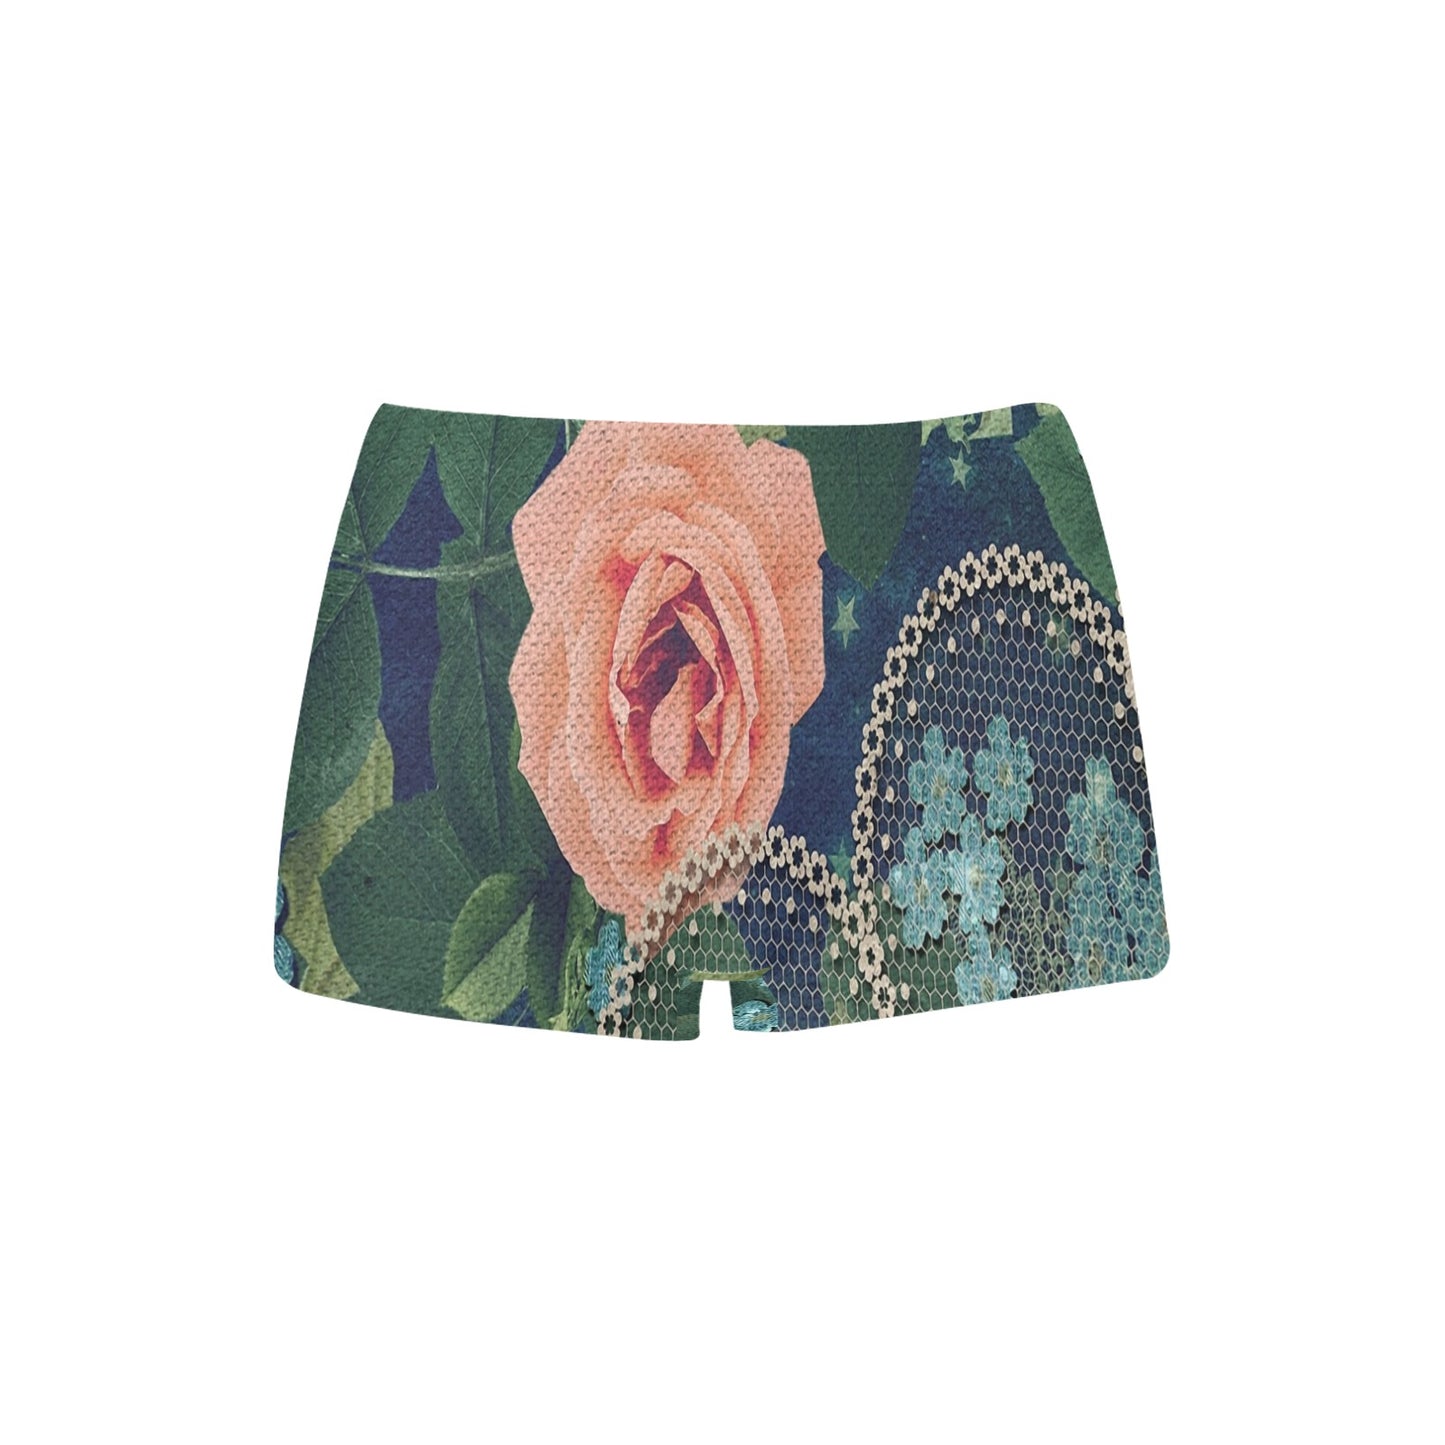 Printed Lace Boyshorts, daisy dukes, pum pum shorts, shortie shorts , design 01